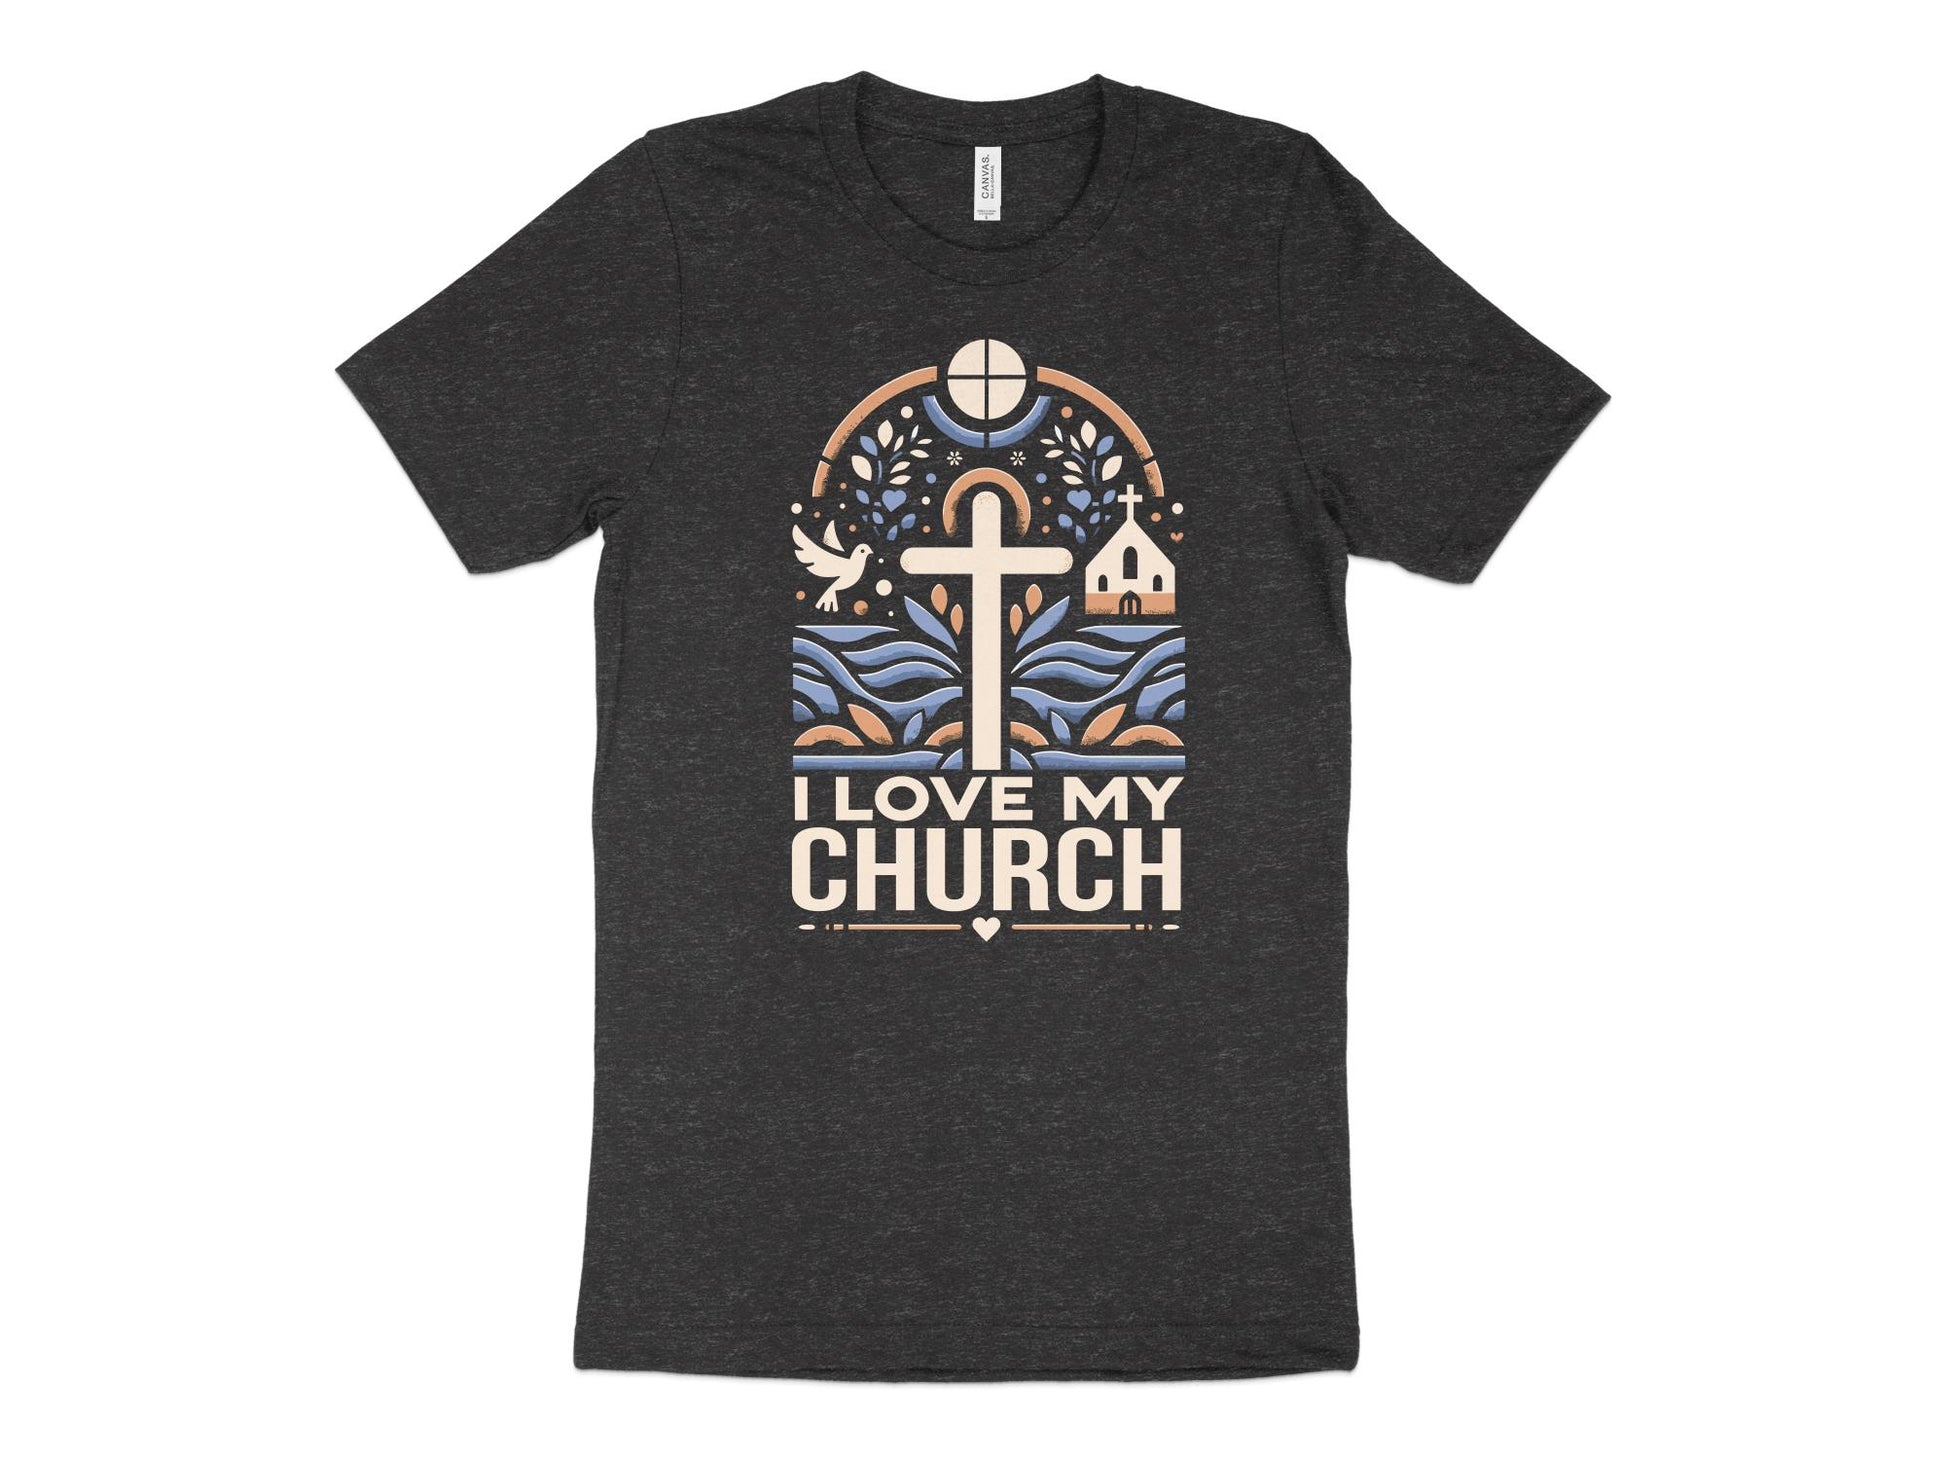 I Love My Church Shirts, charcoal